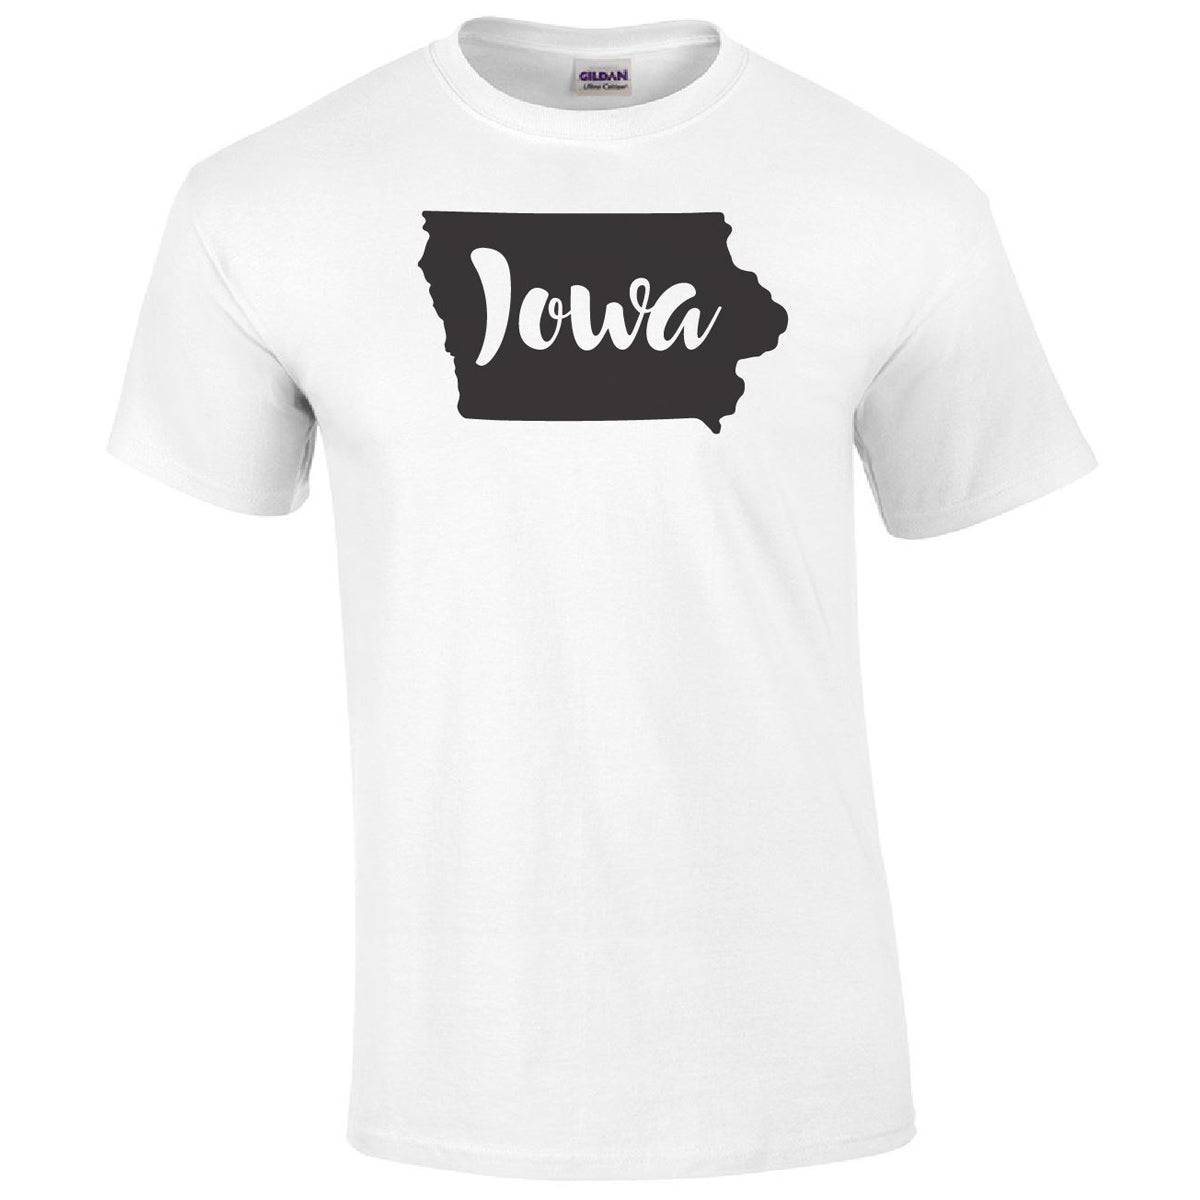 Iowa State Outline Printed Tee Humorous Shirt 411 Adult Small White 